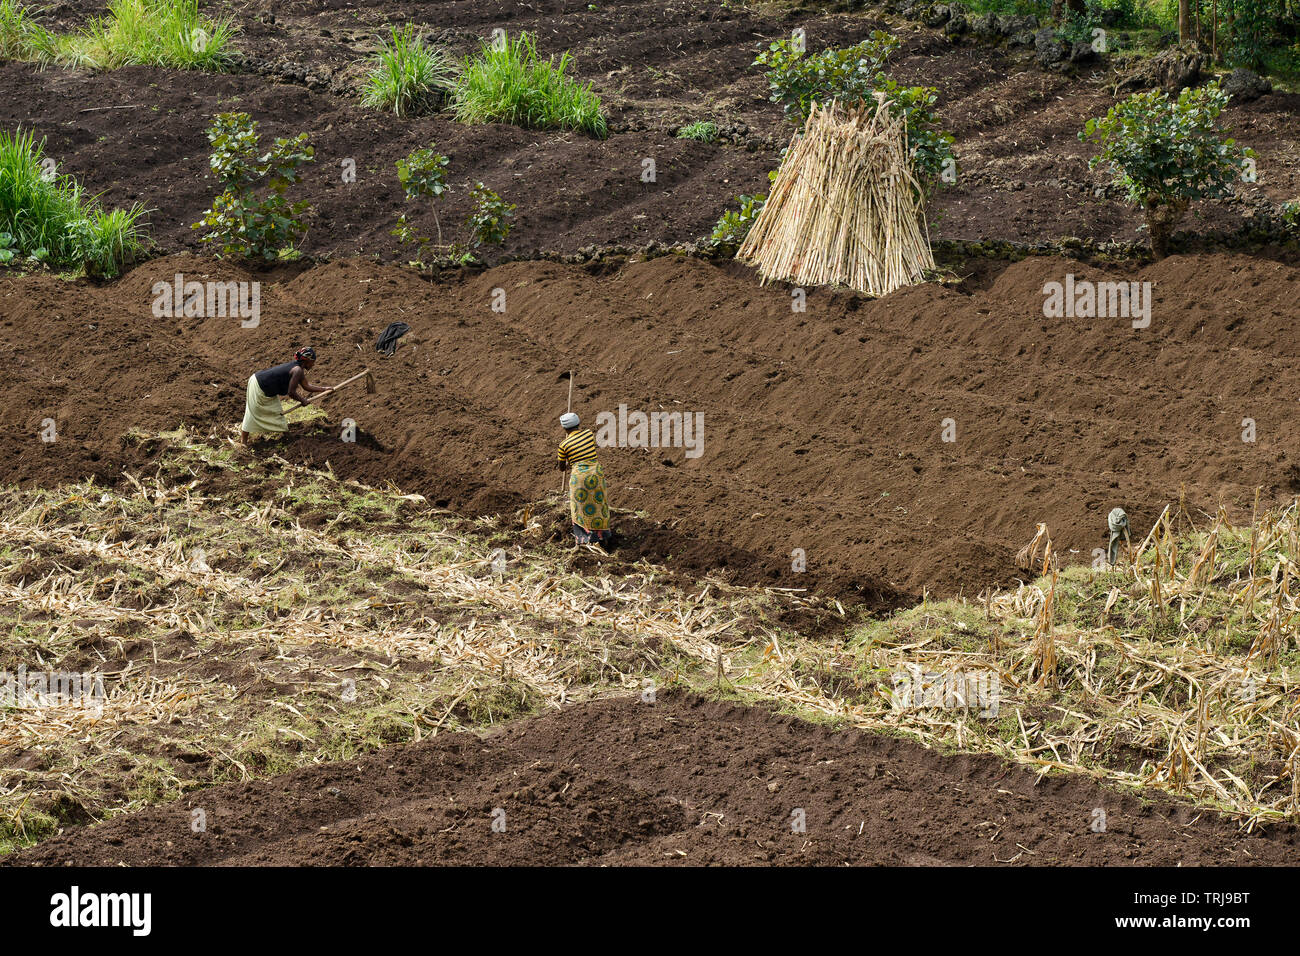 Ruanda, Ruhengeri, piccole aziende agricole, le donne lavorano con la zappa sui loro fattoria, piccola terra patch fare un reddito hard / RUANDA, Ruhengeri, kleinparzellige Landwirtschaft, trotz fruchtbarer Boeden in der Vulkanlandschaft sind die Ertraege gering Foto Stock